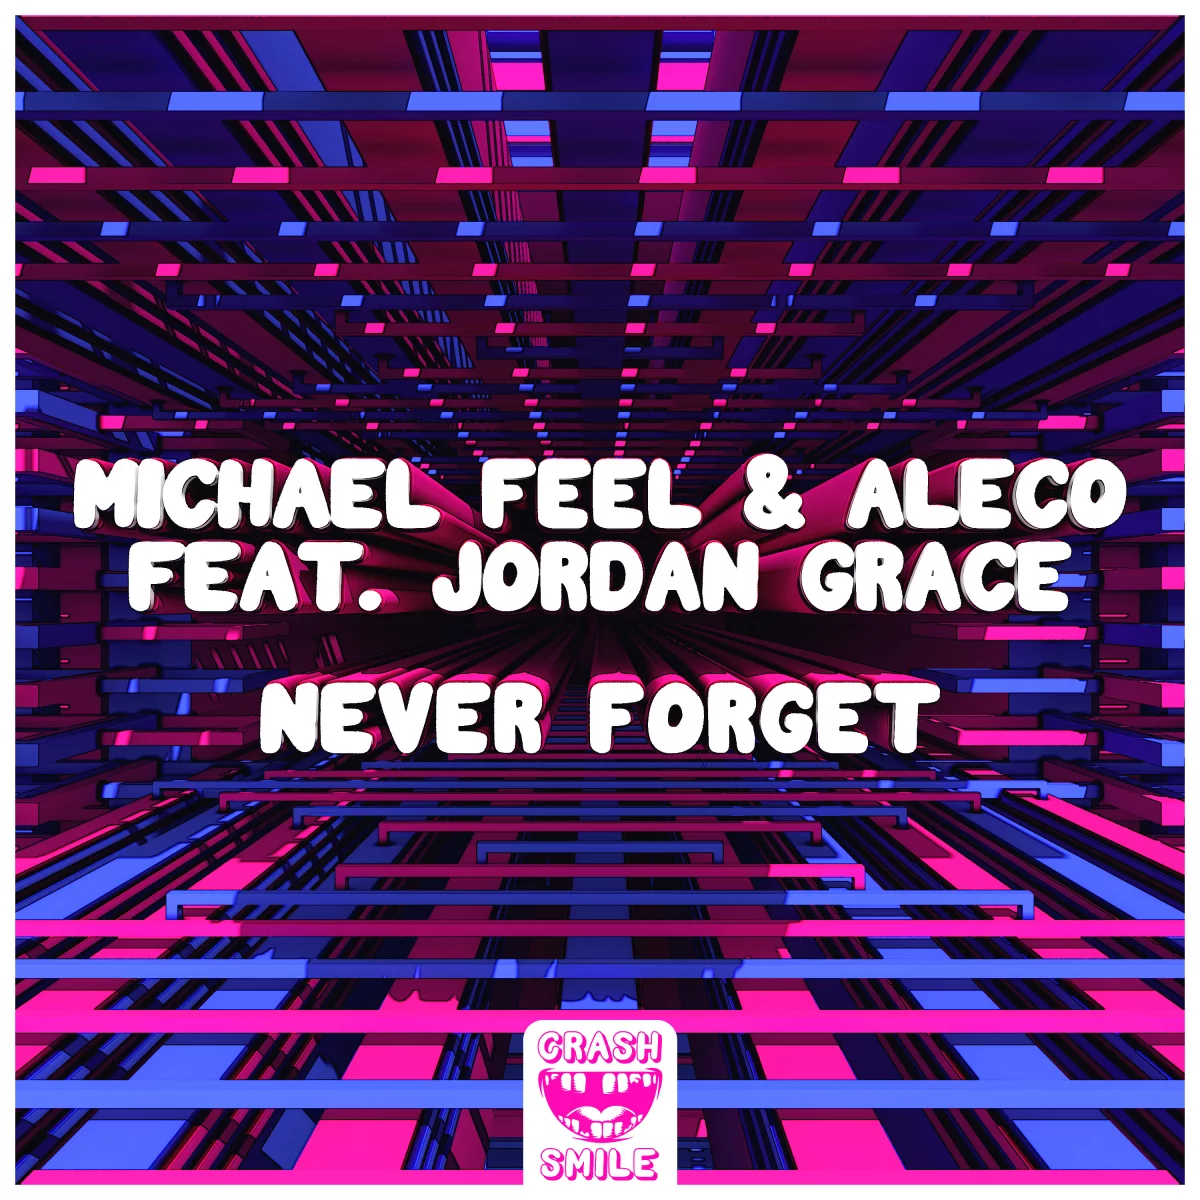 Never Forget - Michael Feel⁠ , Aleco⁠ , Jordan Grace⁠ 